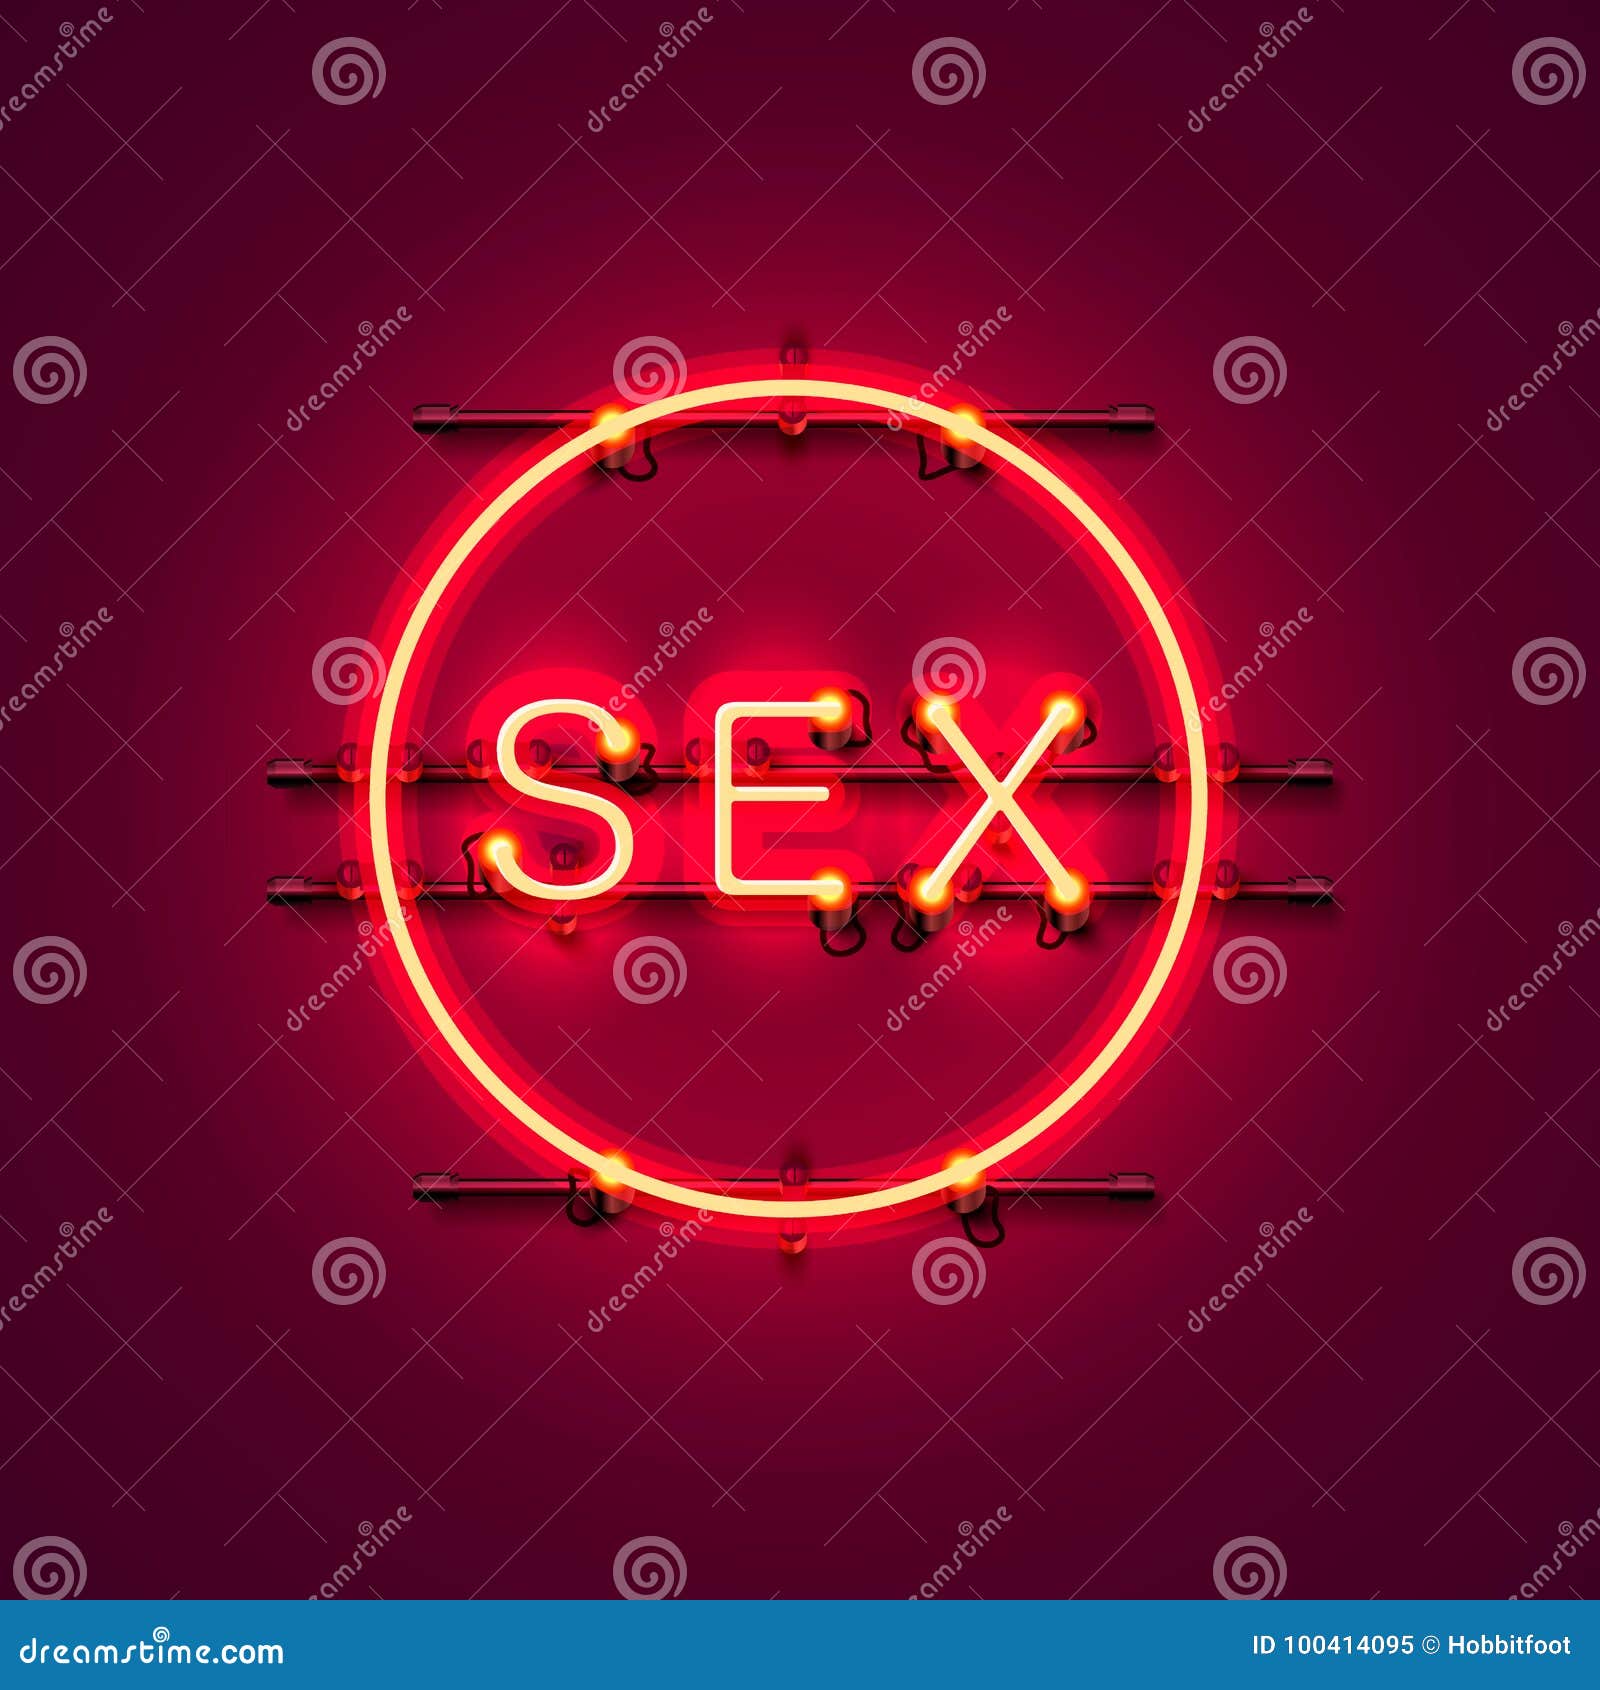 Neon Banner Sex Text Stock Vector Illustration Of Illustration 100414095